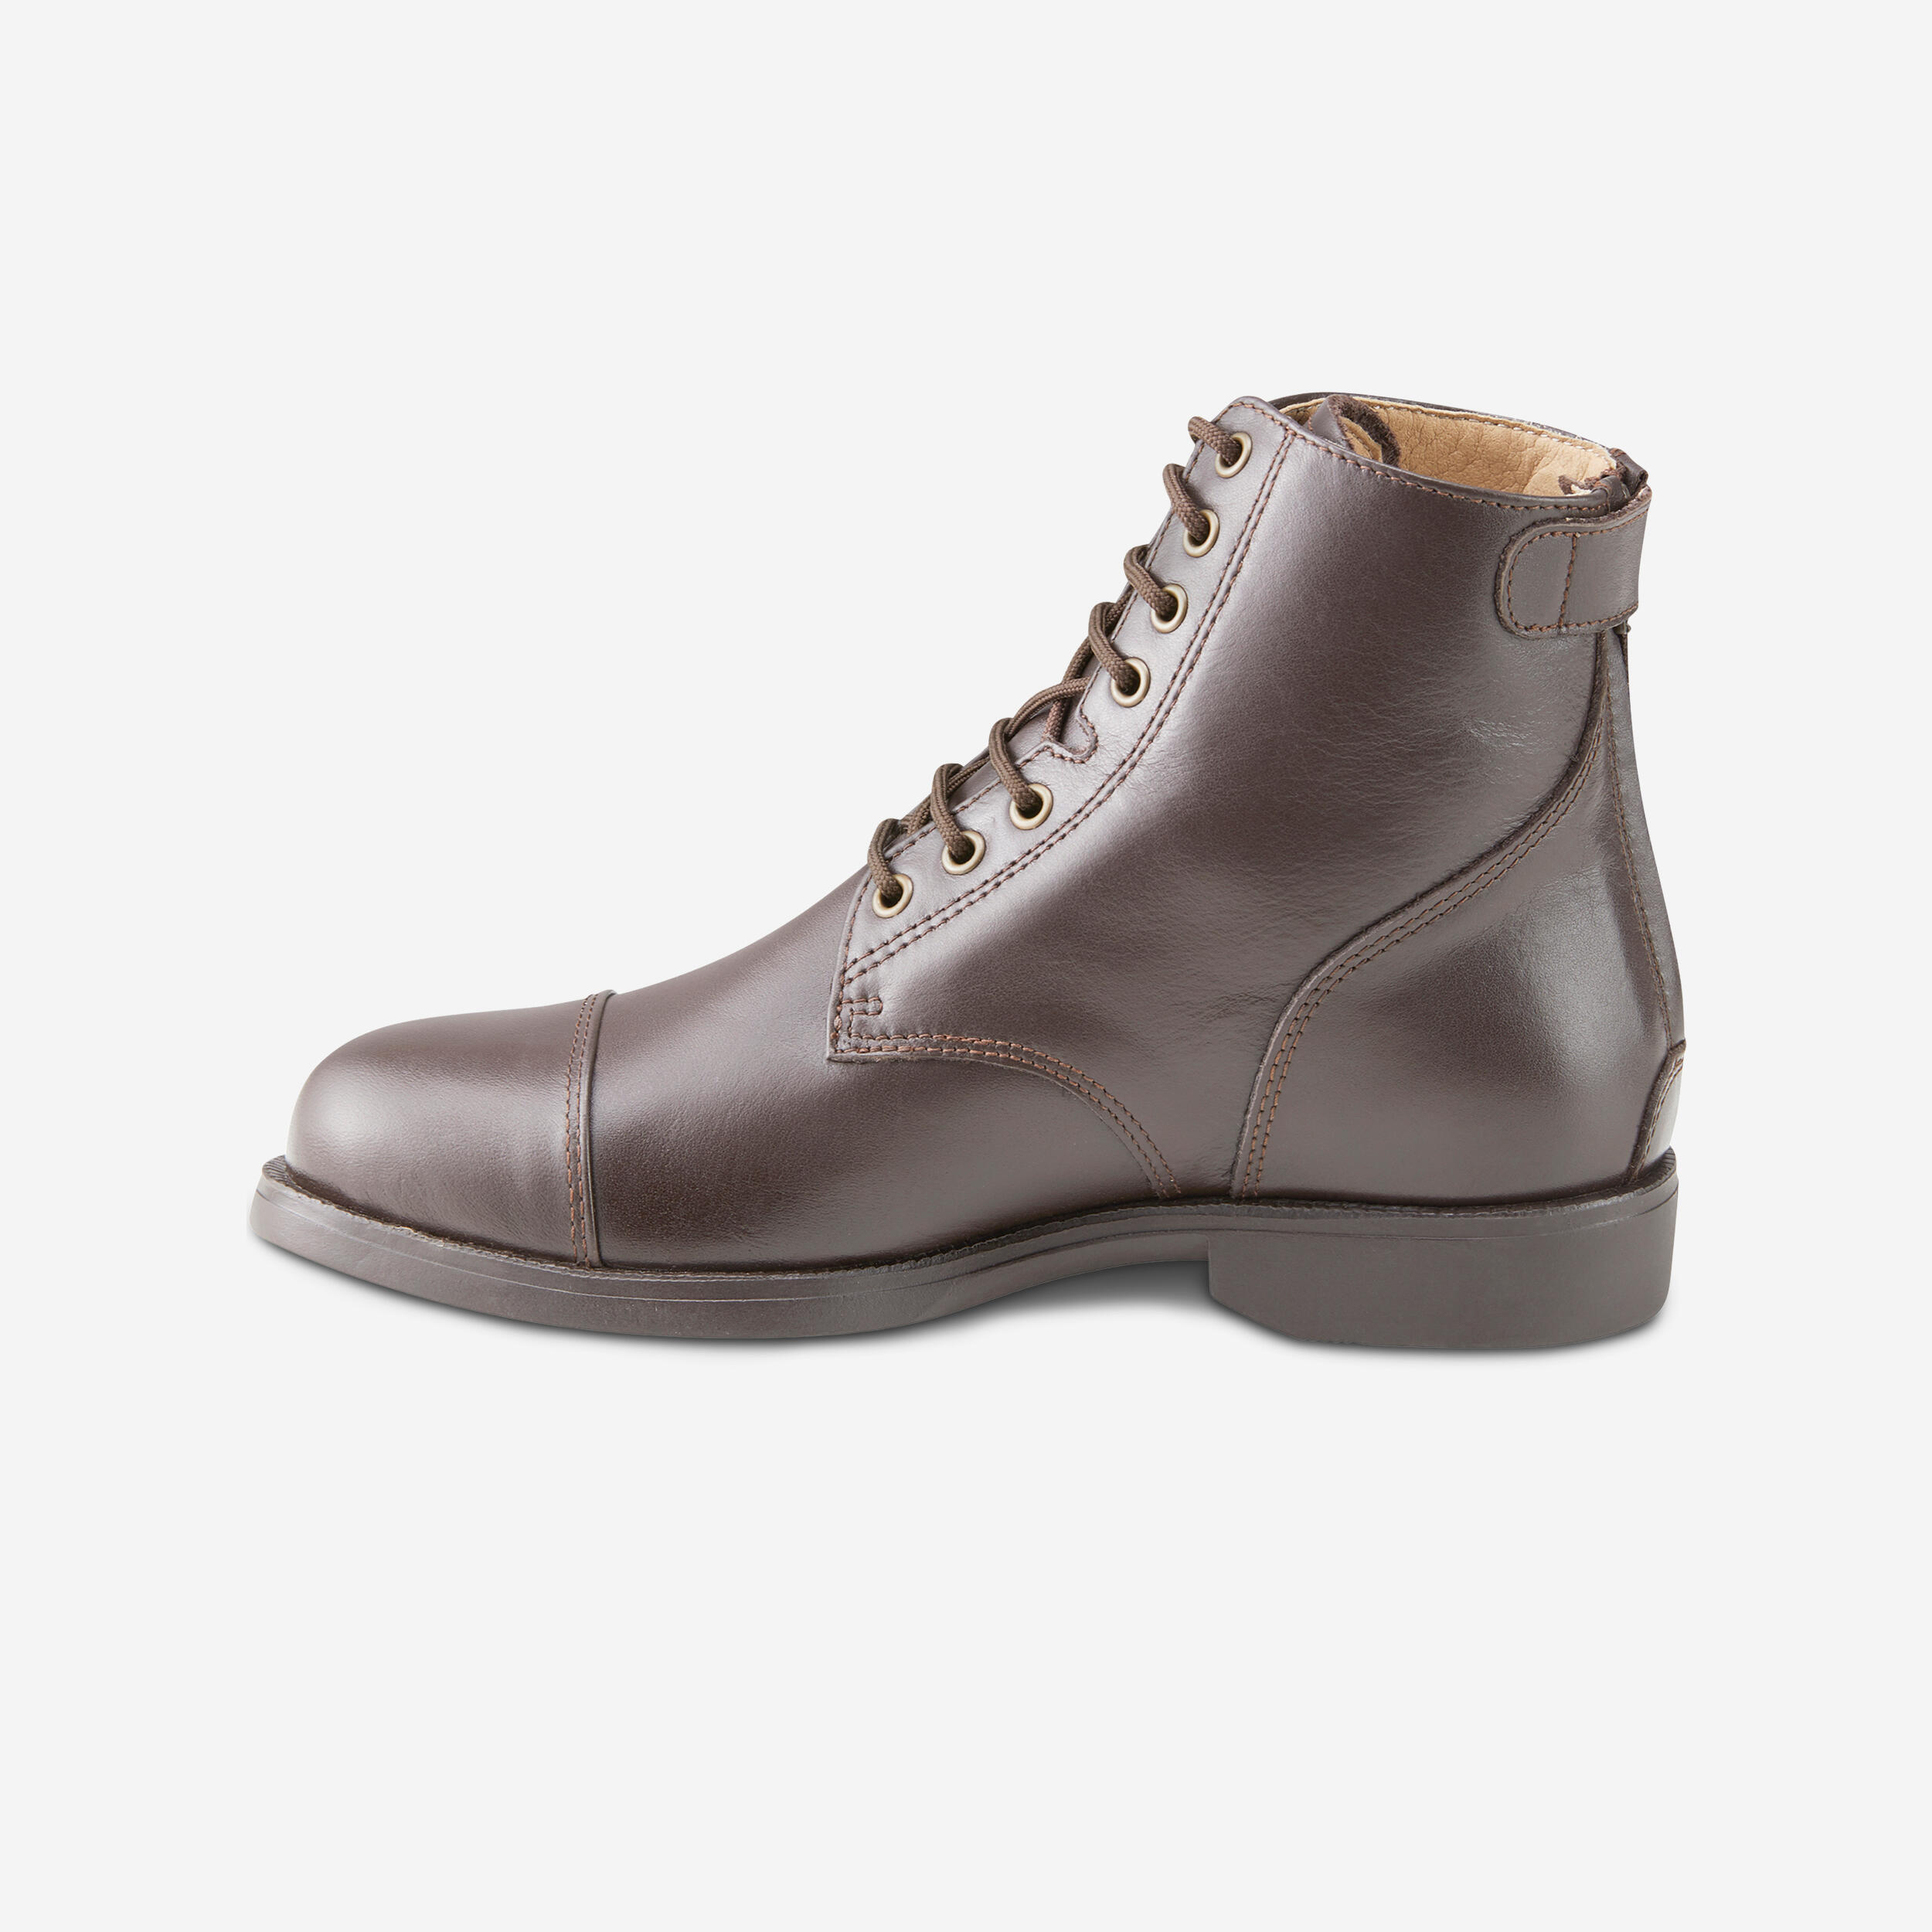 boots équitation cuir paddock lacets adulte - 560 marrons - fouganza